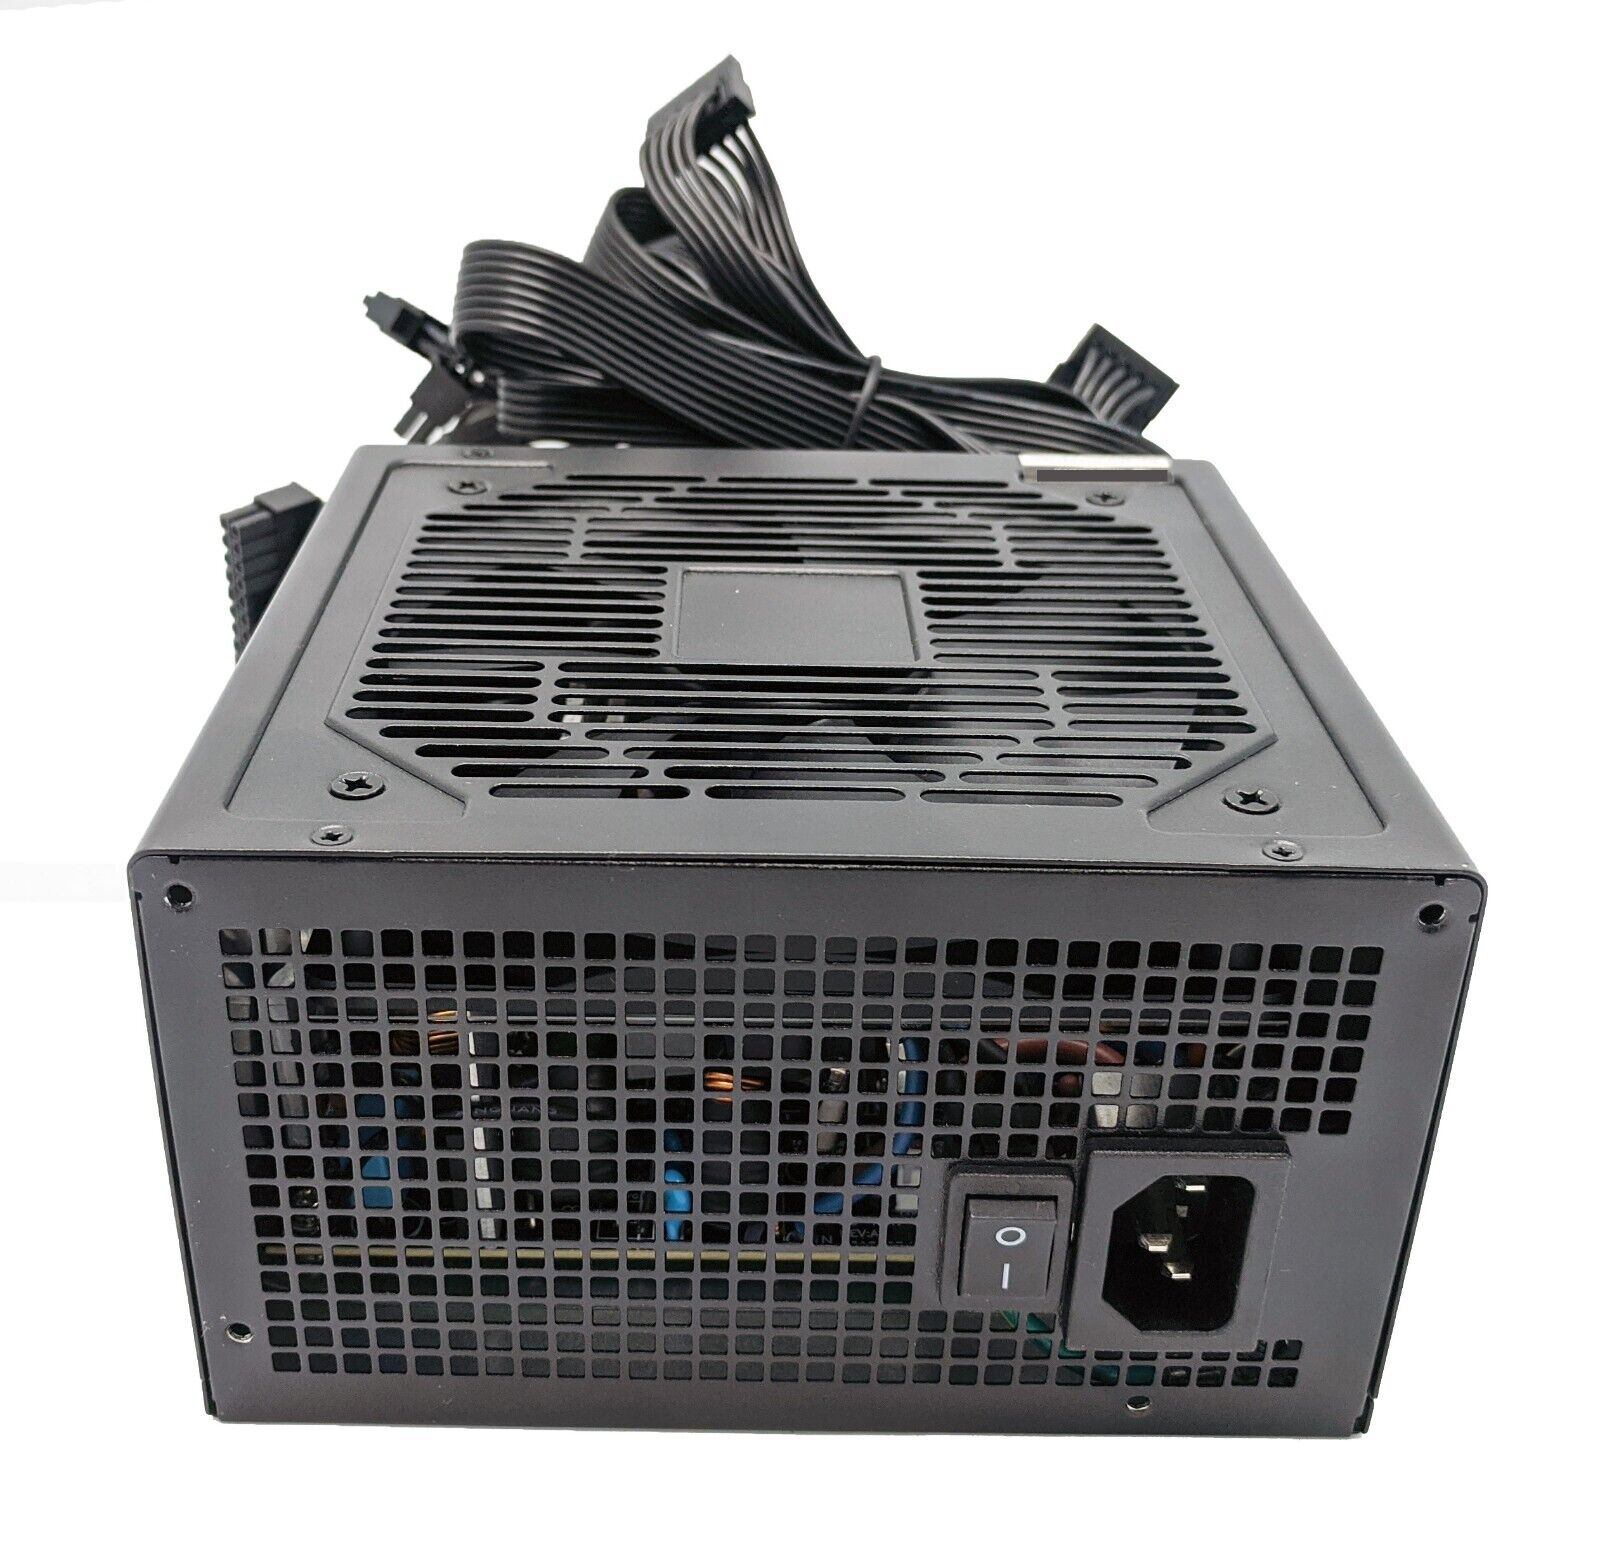 500W Video Card Upgrade Power Supply for eMachine/Gateway/Lenovo/hp Desktop PC